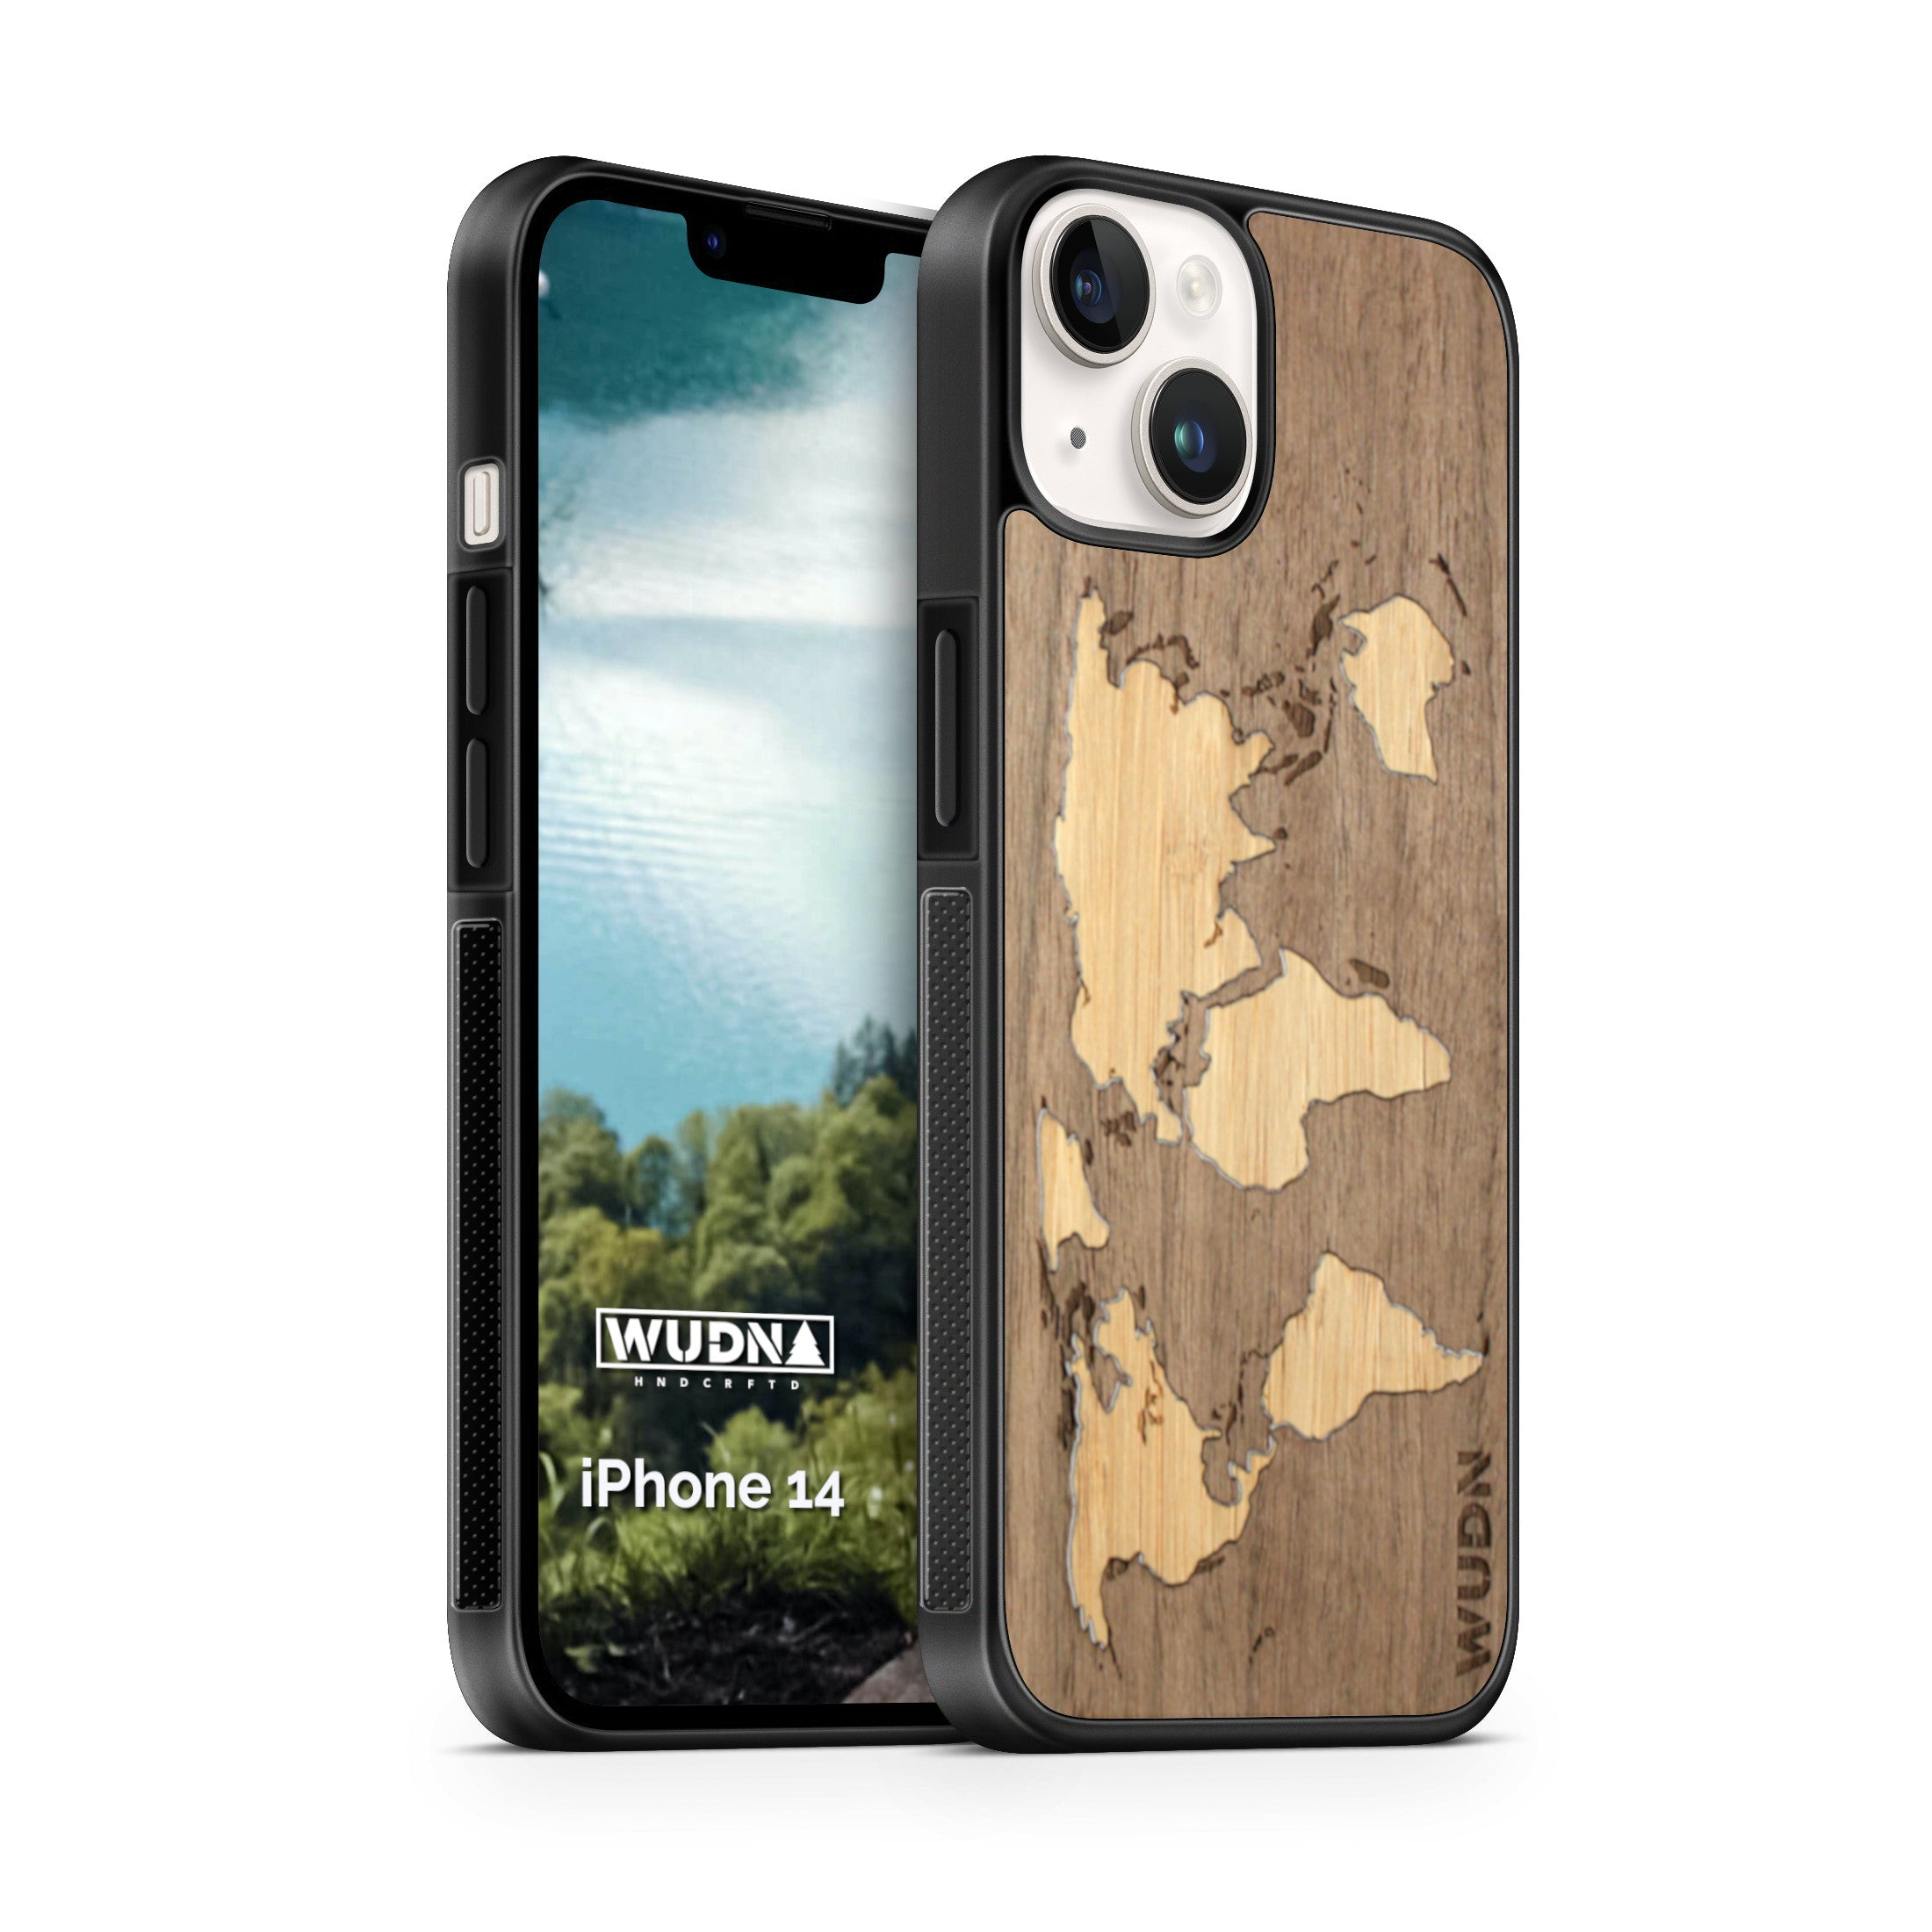 Slim Wooden iPhone Case (World Map Traveler - Walnut Ocean)